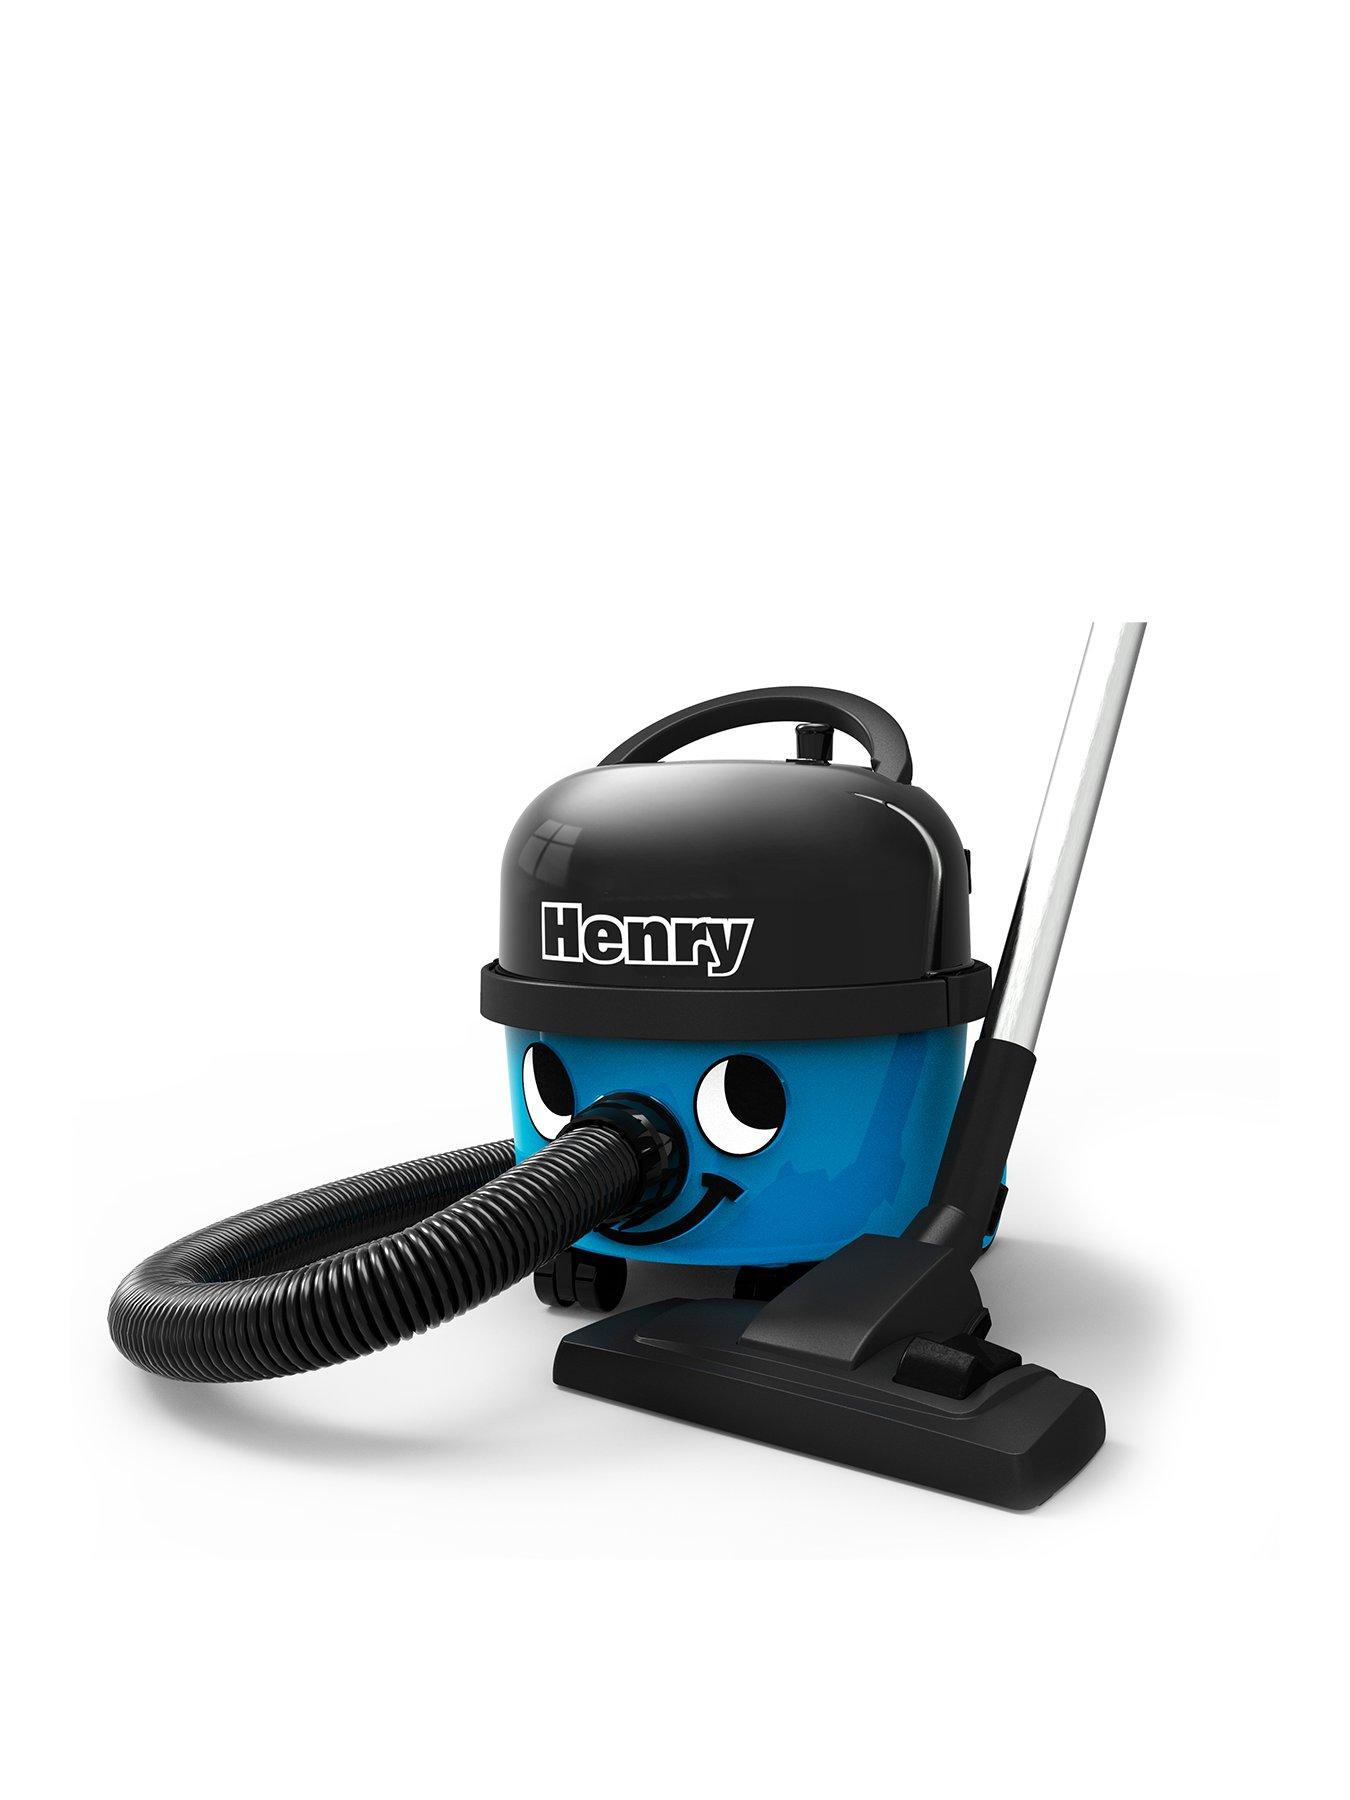 Henry Hoover, Numatic Vacuum Cleaner, Blue